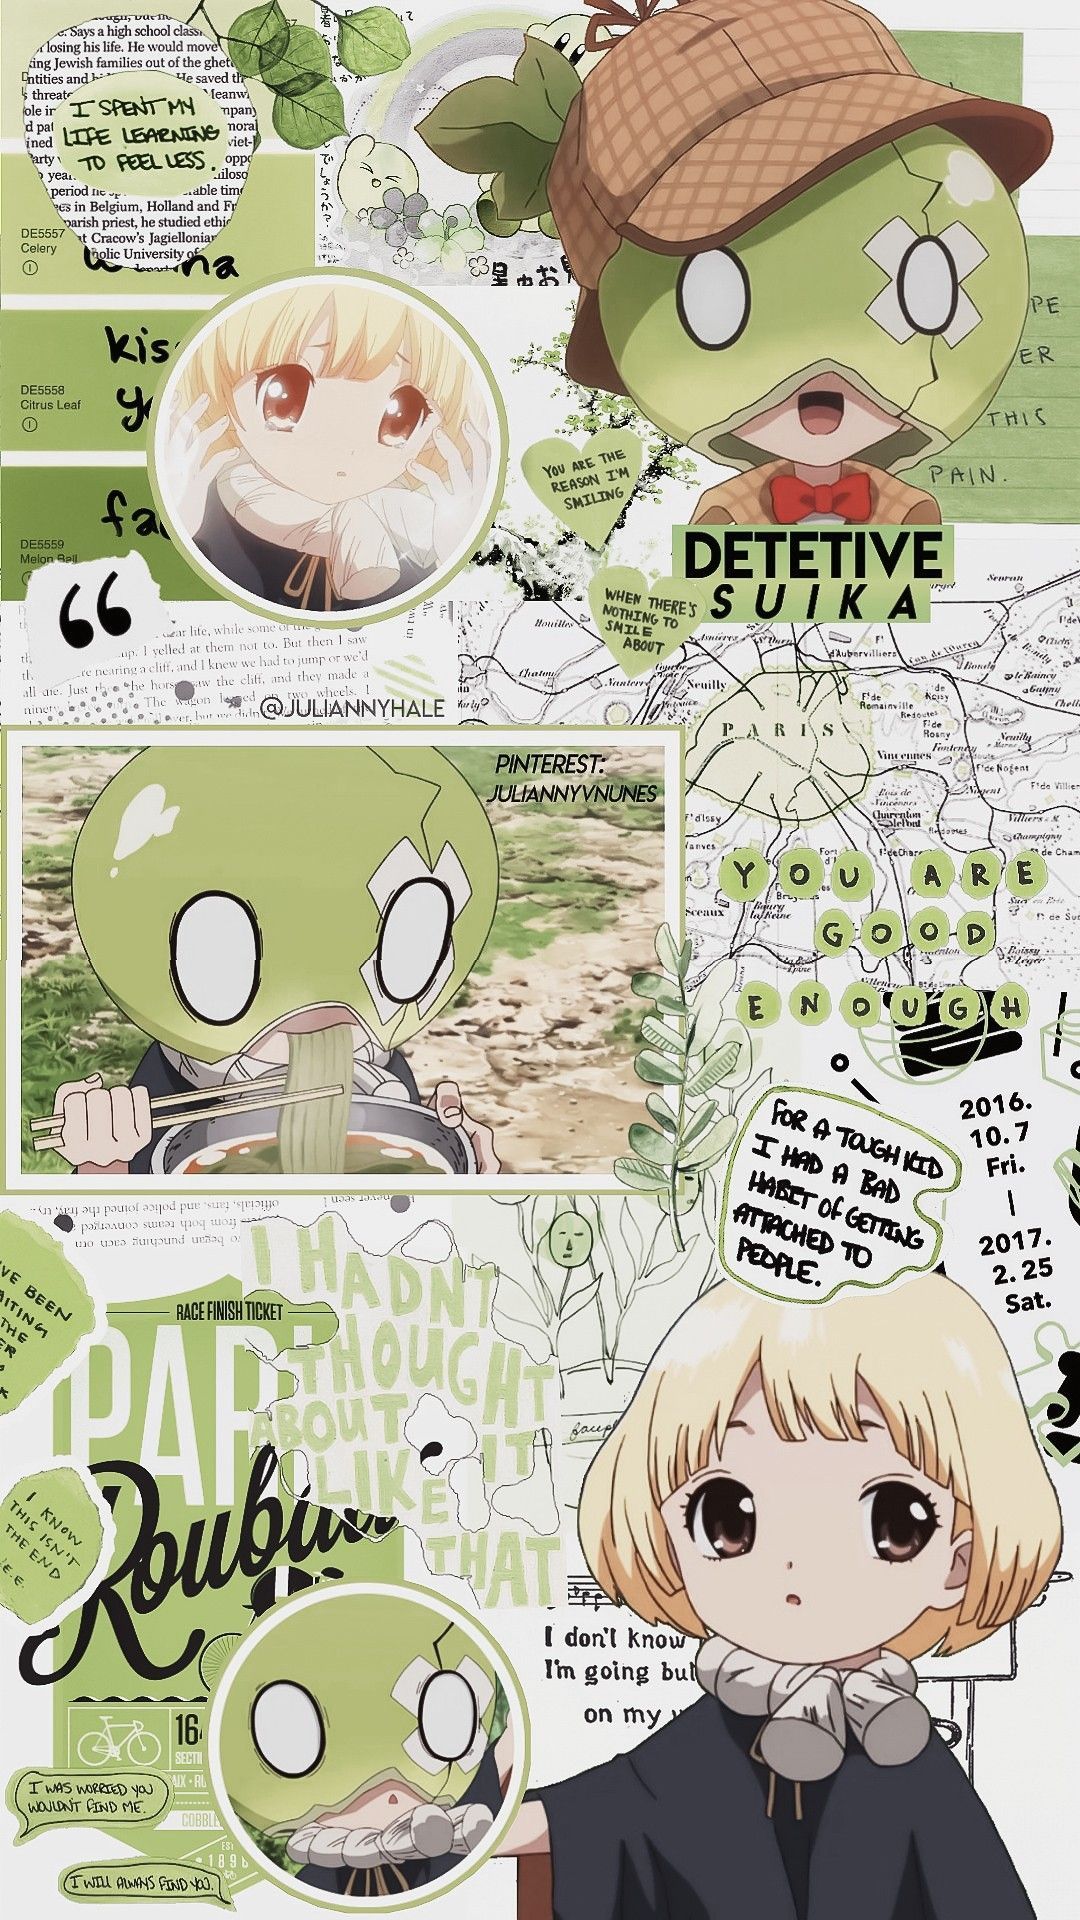 Dr. Stone. Suika. Cute anime wallpaper, Aesthetic anime, Anime wallpaper